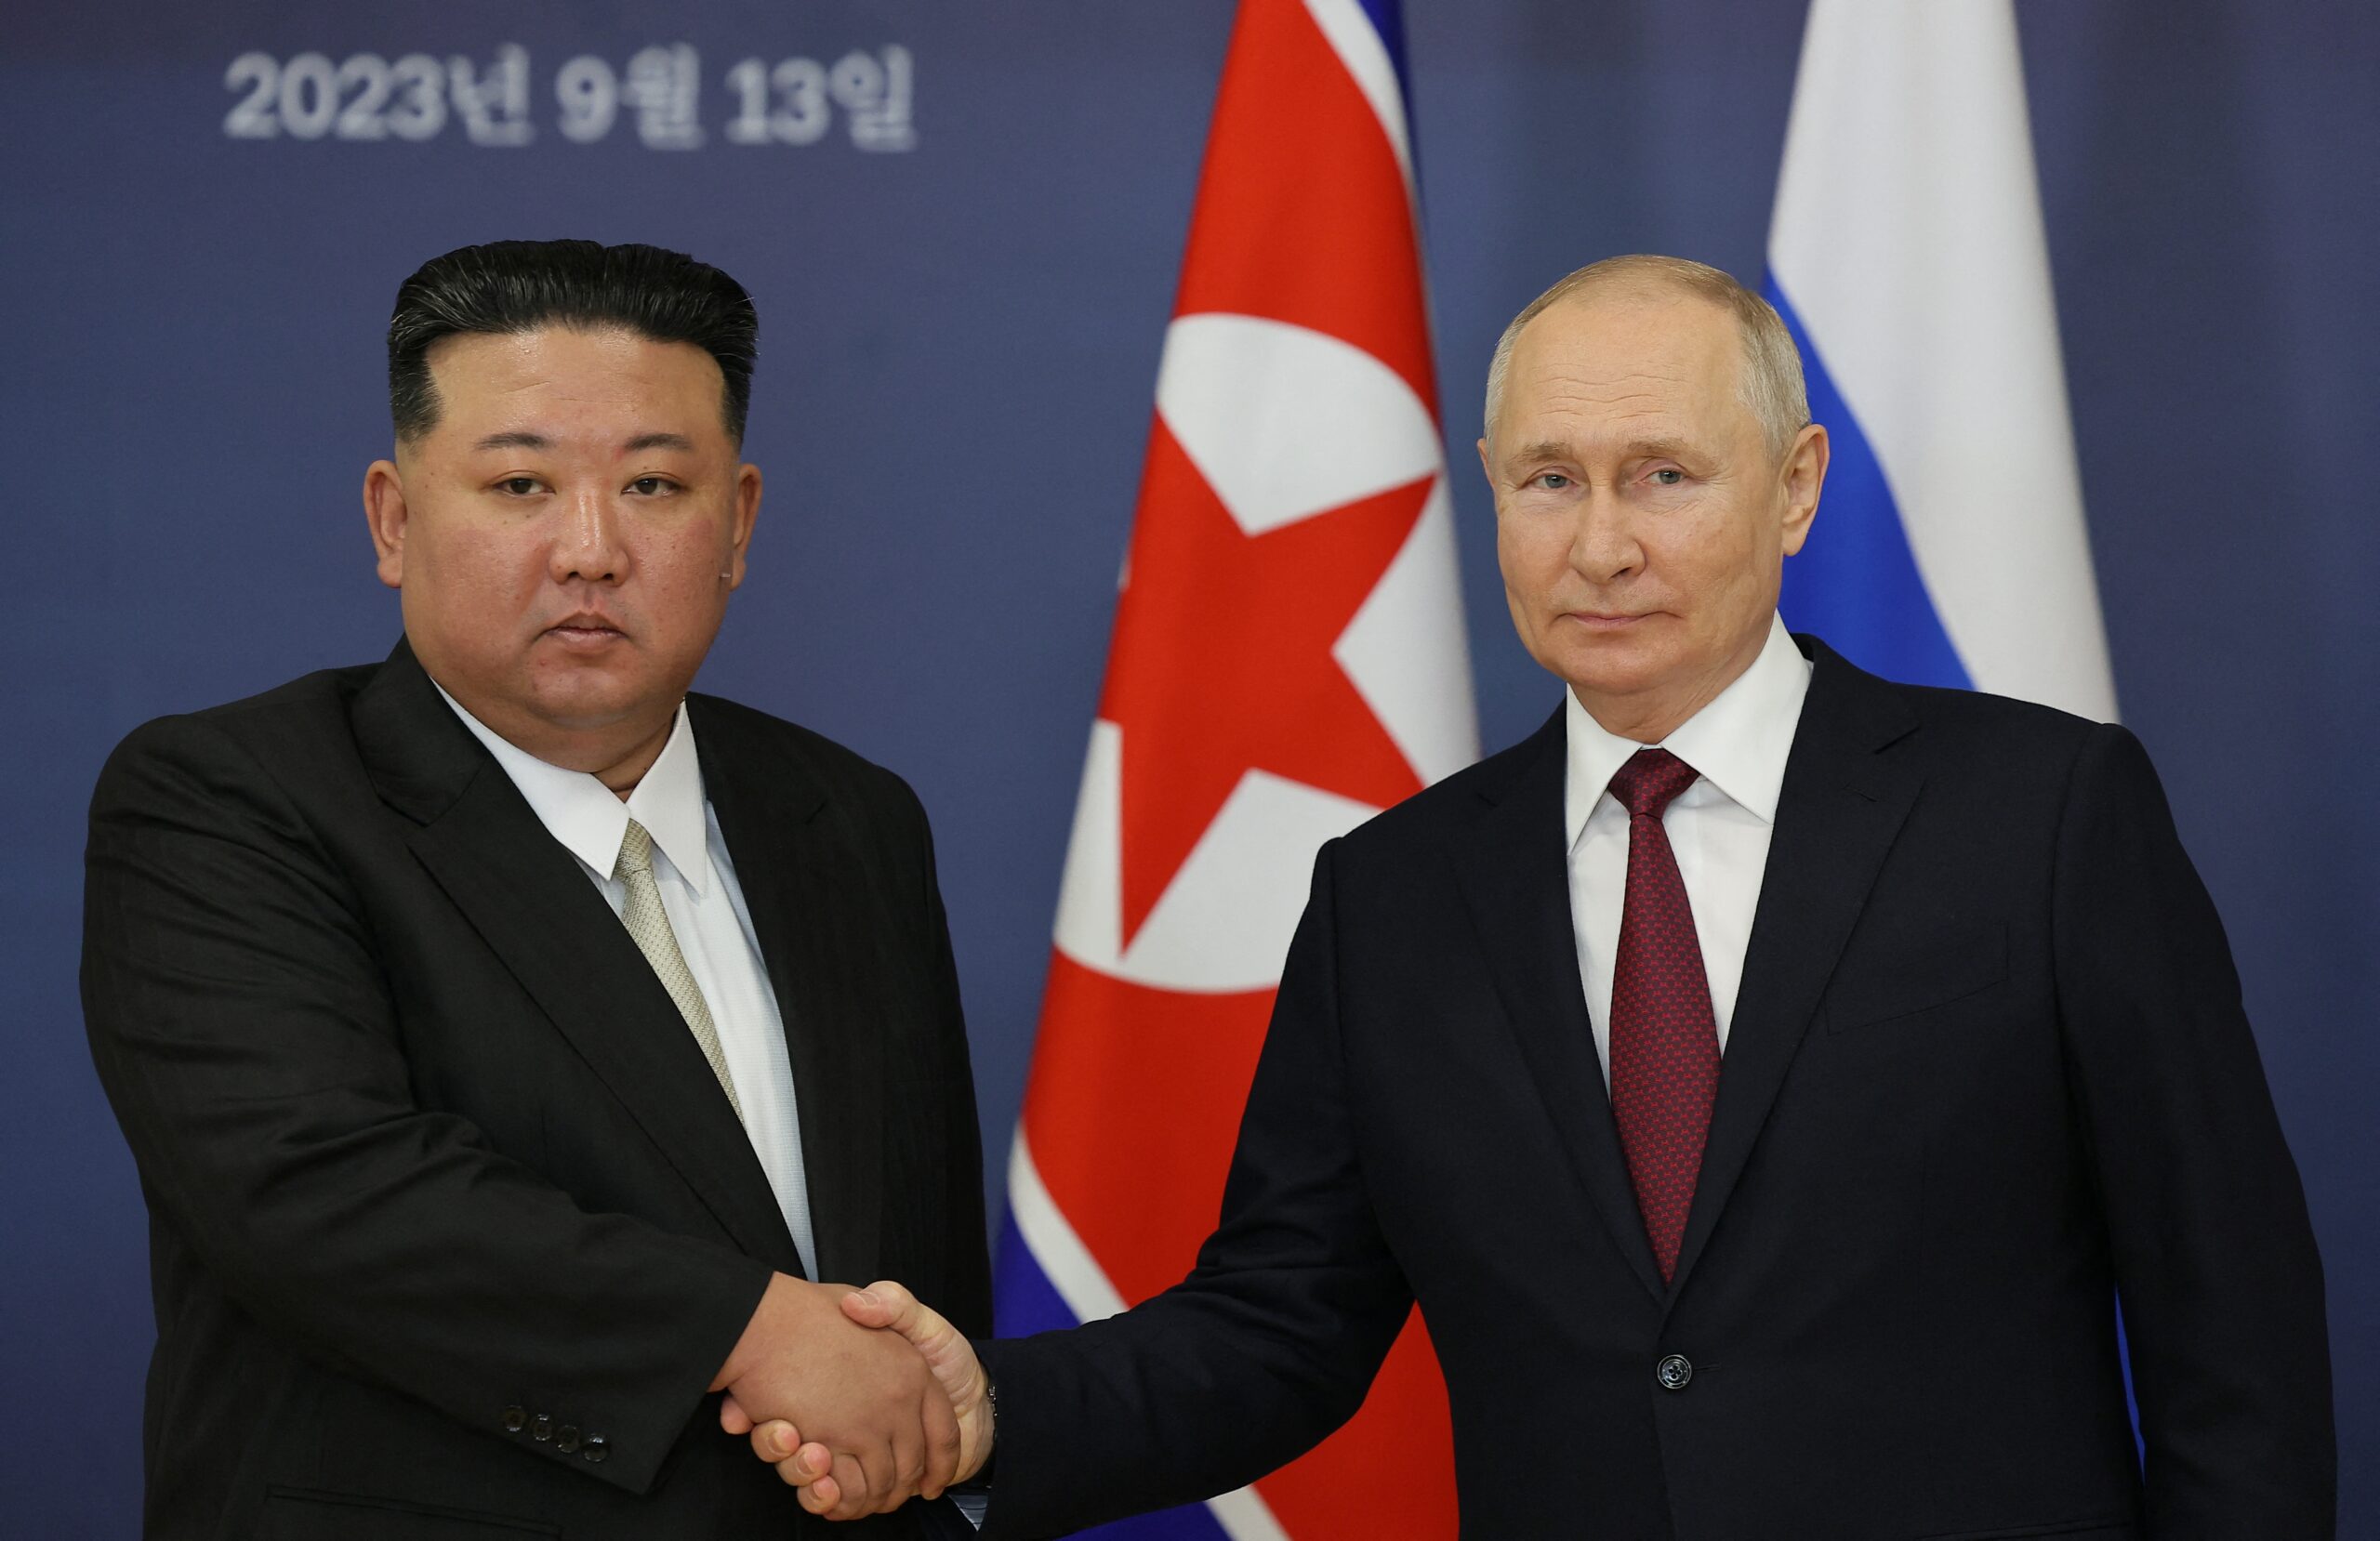 Putin hails N. Korea's support for Ukraine war ahead of Pyongyang visit